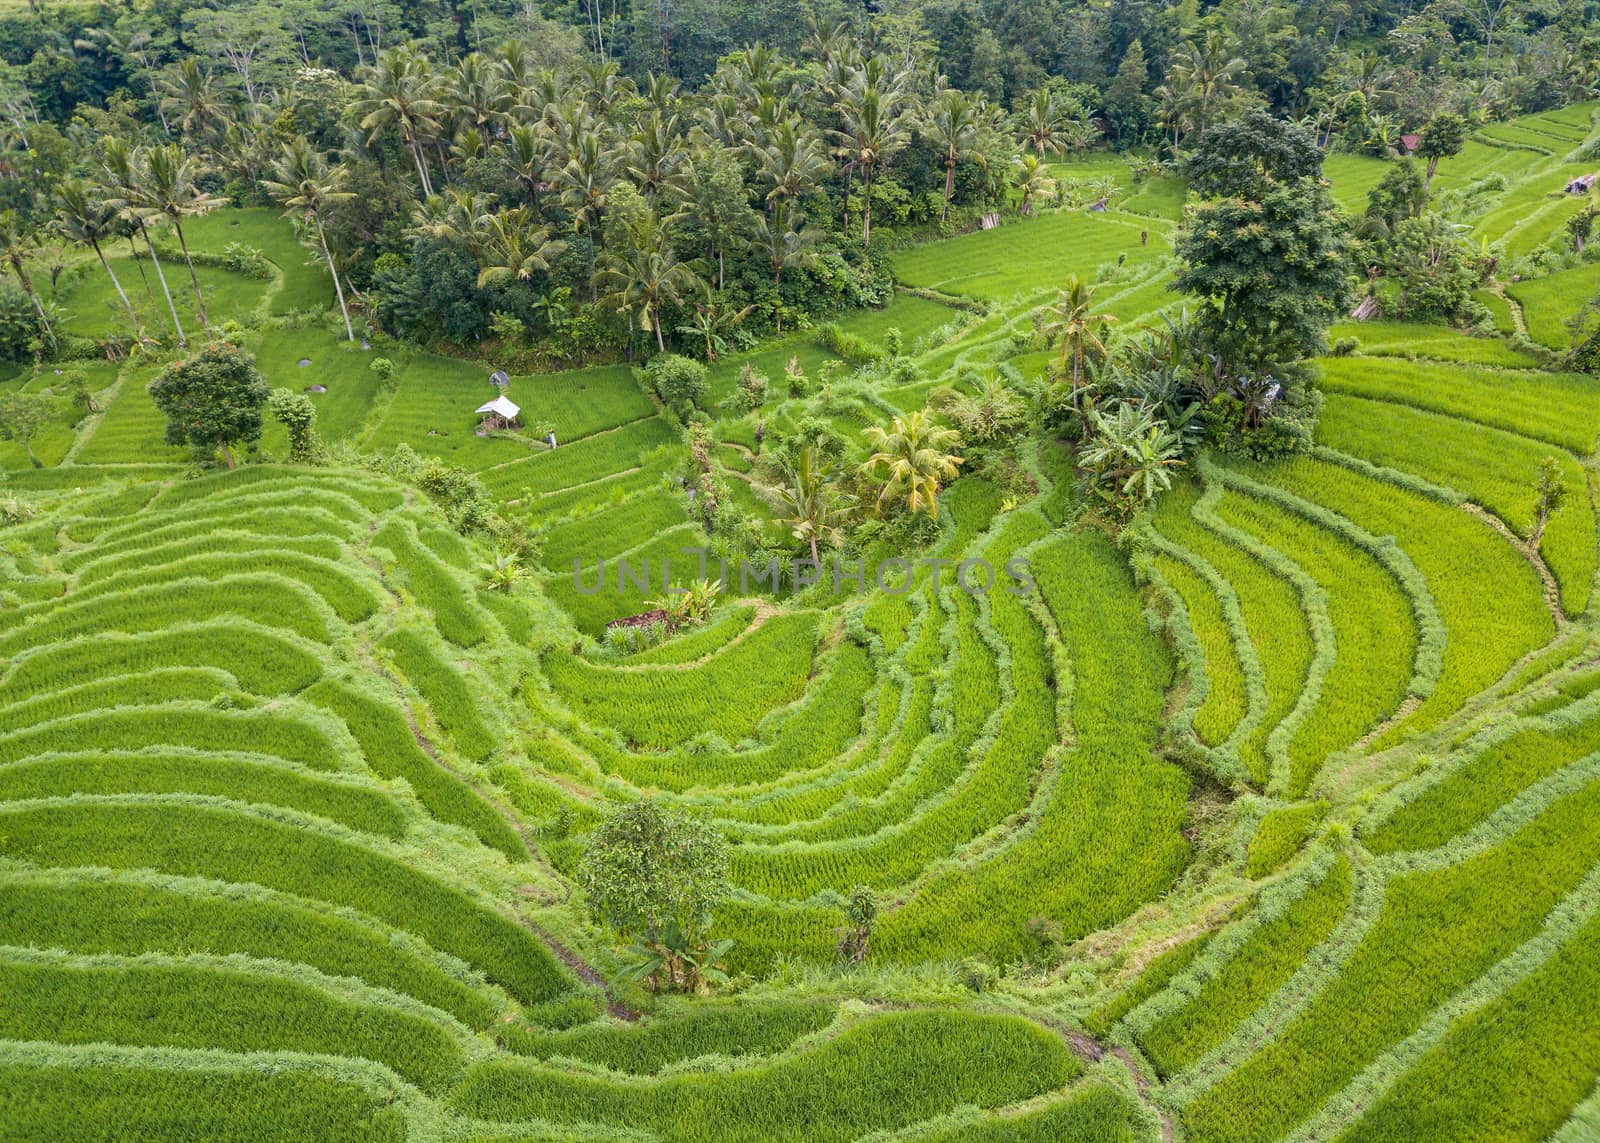 Aerial view of rice terraces in Bali by dutourdumonde